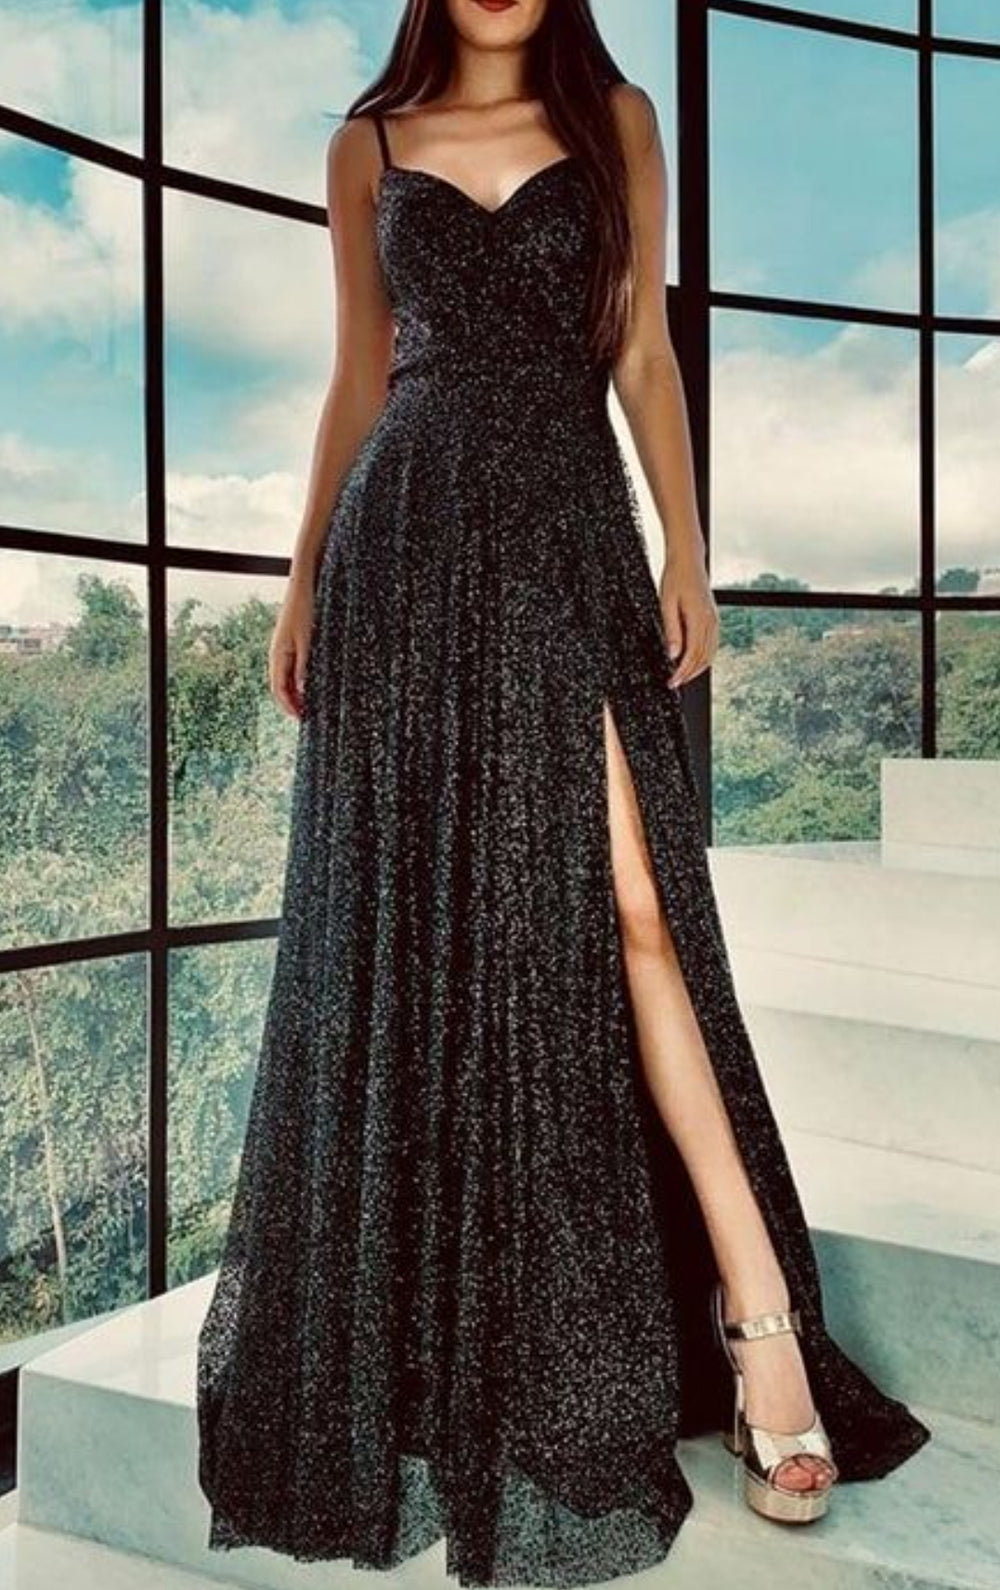 Black Sequin Dresses 25 Elegant Choices • Browse at SequinQueen